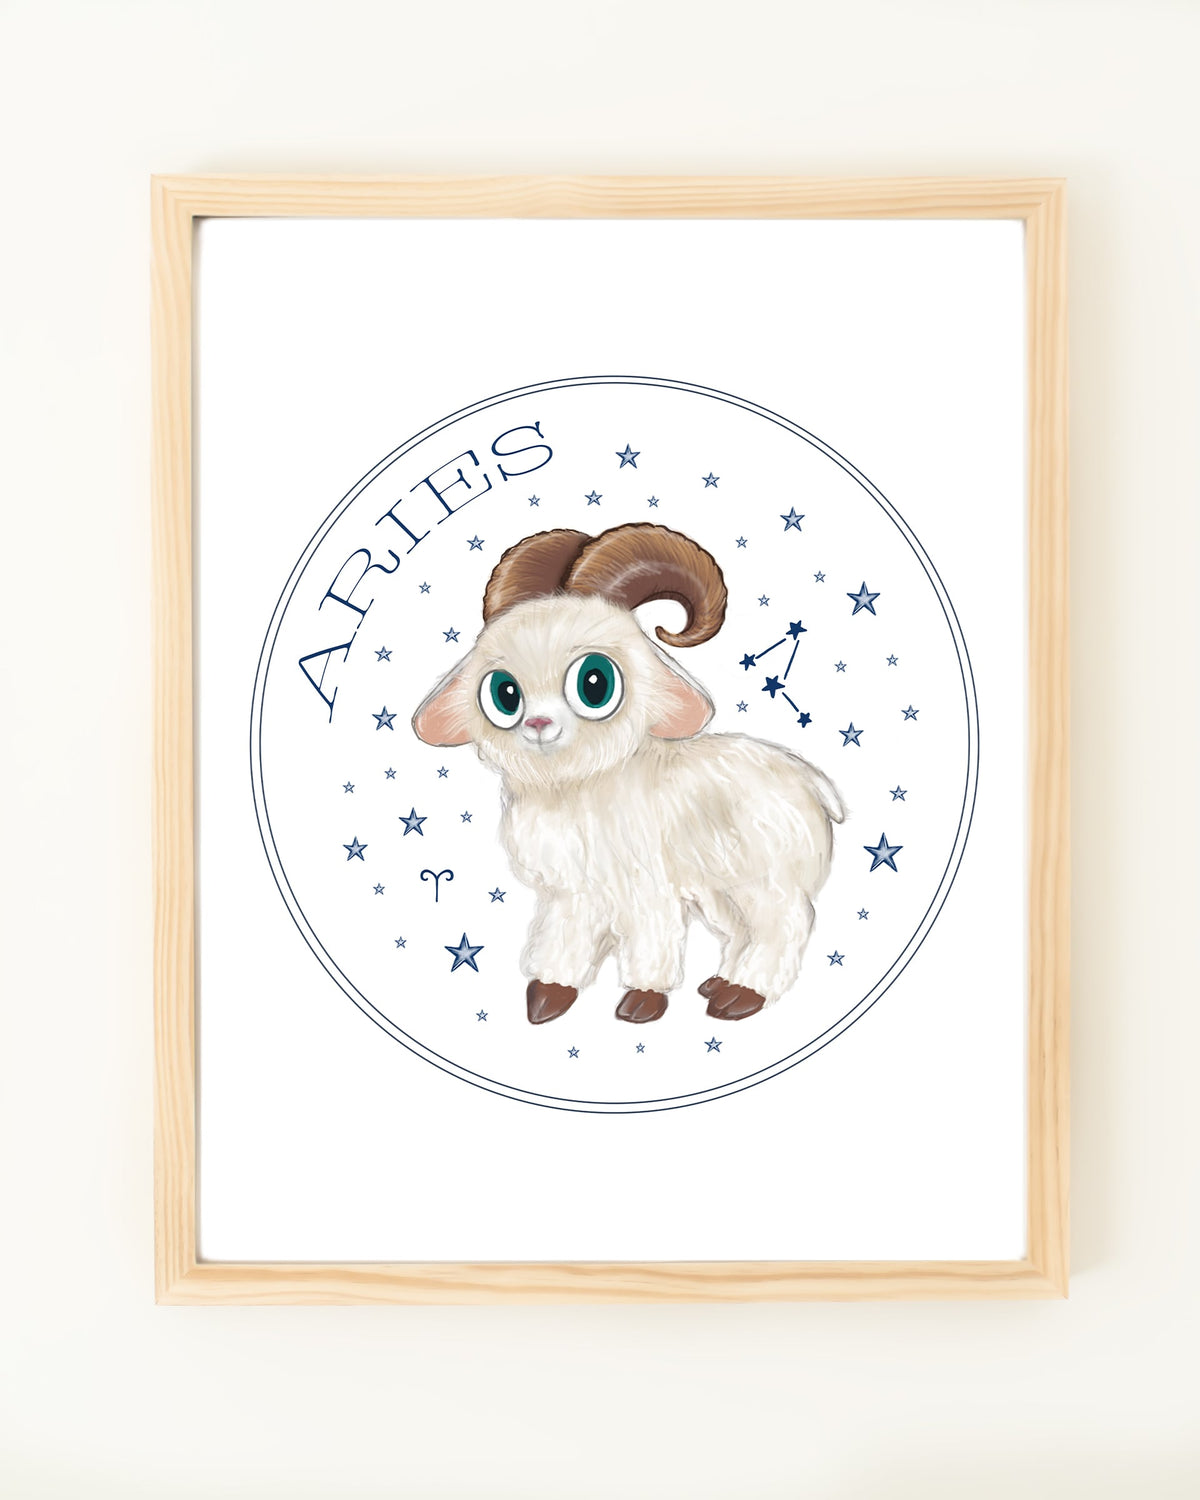 Framed hand drawn stars zodiac nursery decor wall art poster Aries cute baby animal farm sheep 